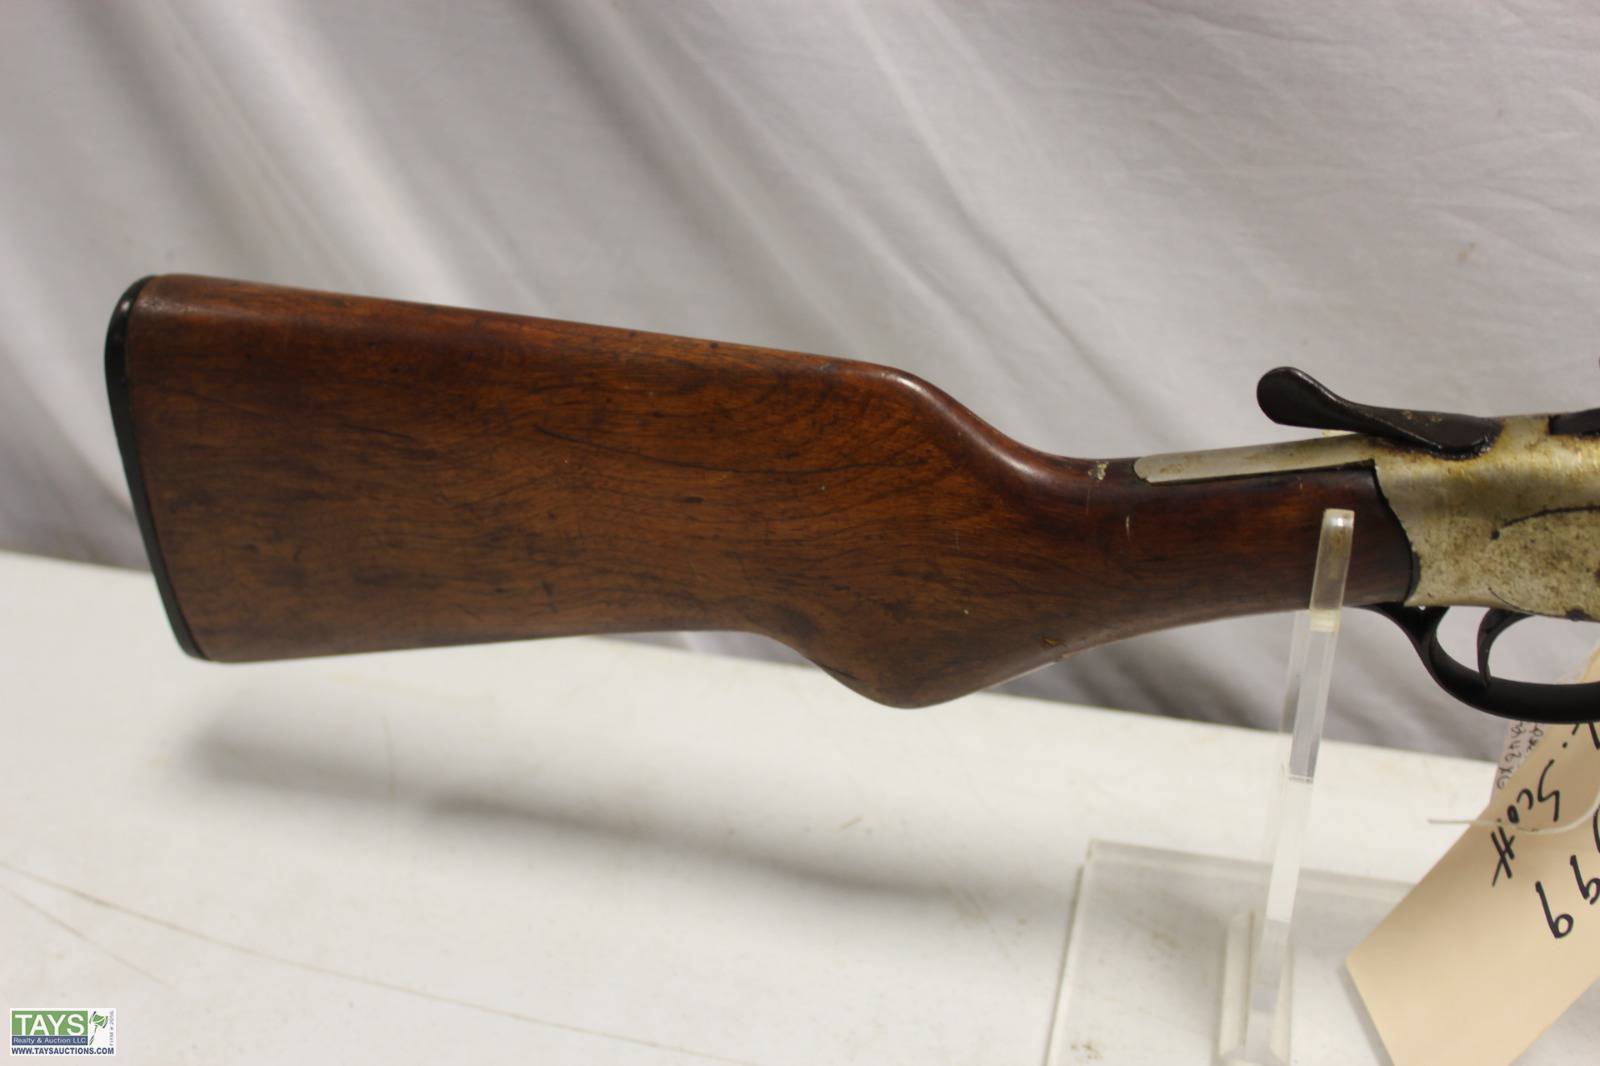 Diamond Arms Shapleigh's King Nitro Single Barrel Break Action Shotgun  (4379), Guns & Military Artifacts Shotguns, Online Auctions